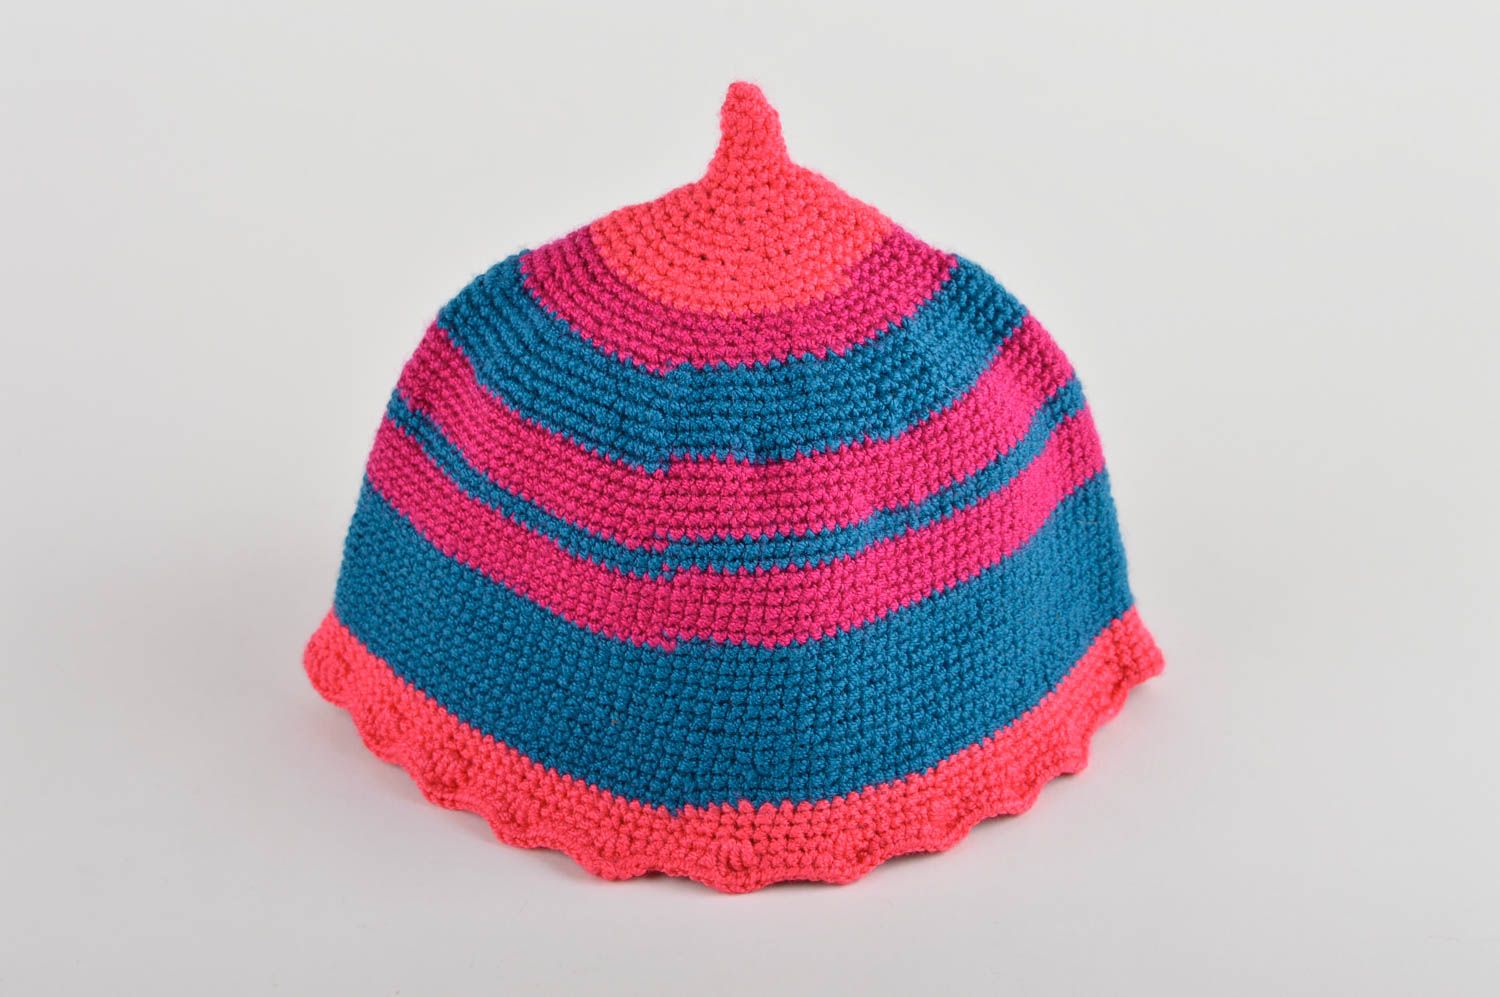 Handmade hat designer hat knitted hat crocheted hat warm hat gift for baby photo 3